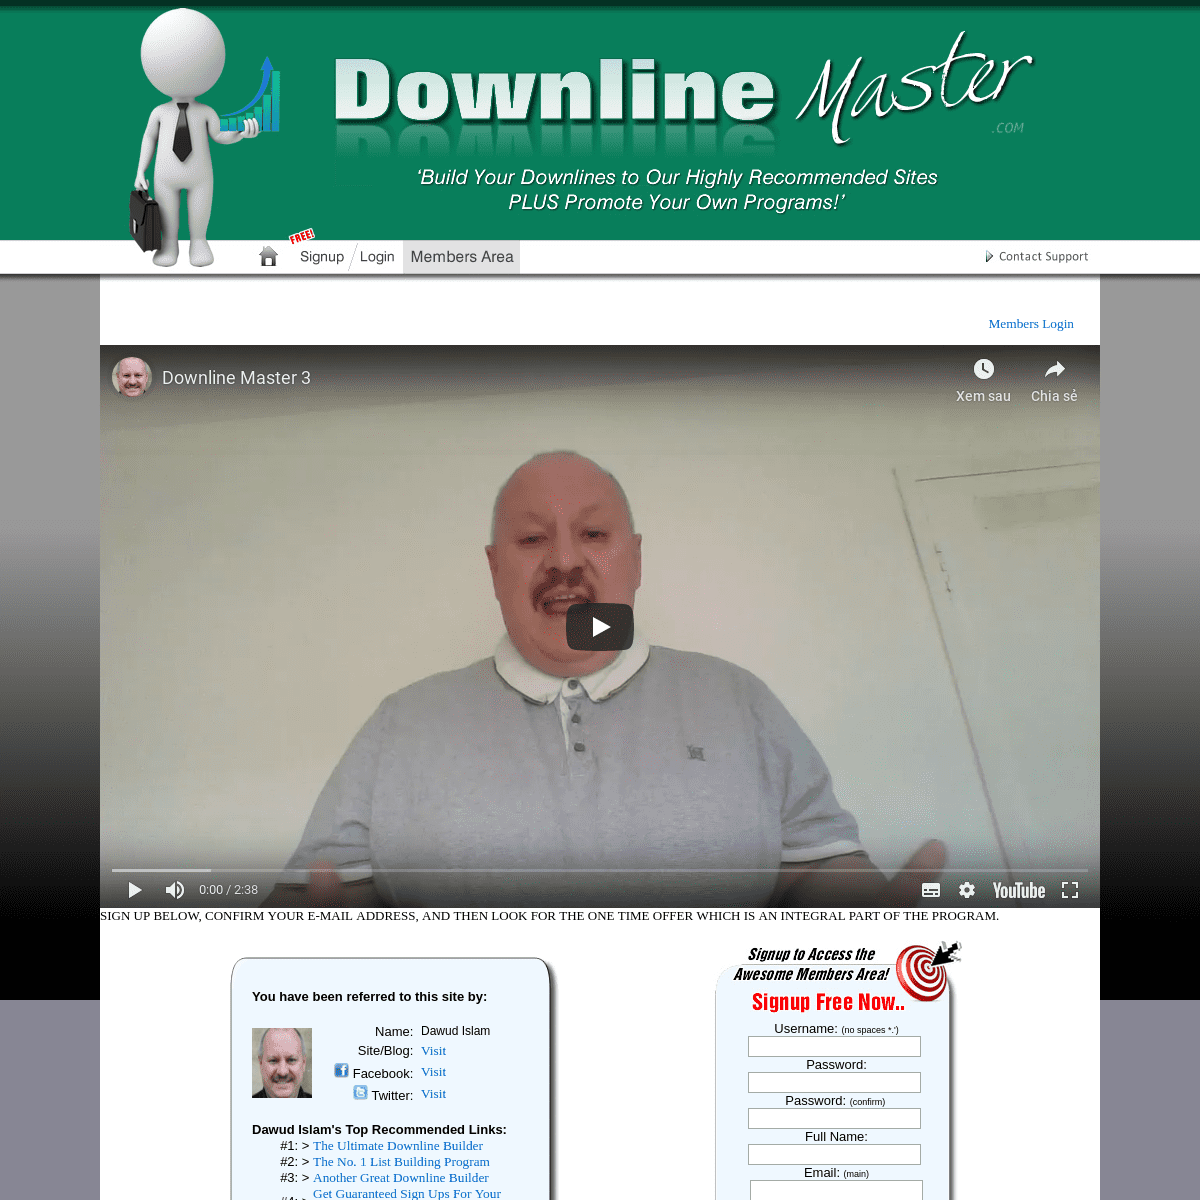 DownlineMaster.com - Build Your Downlines